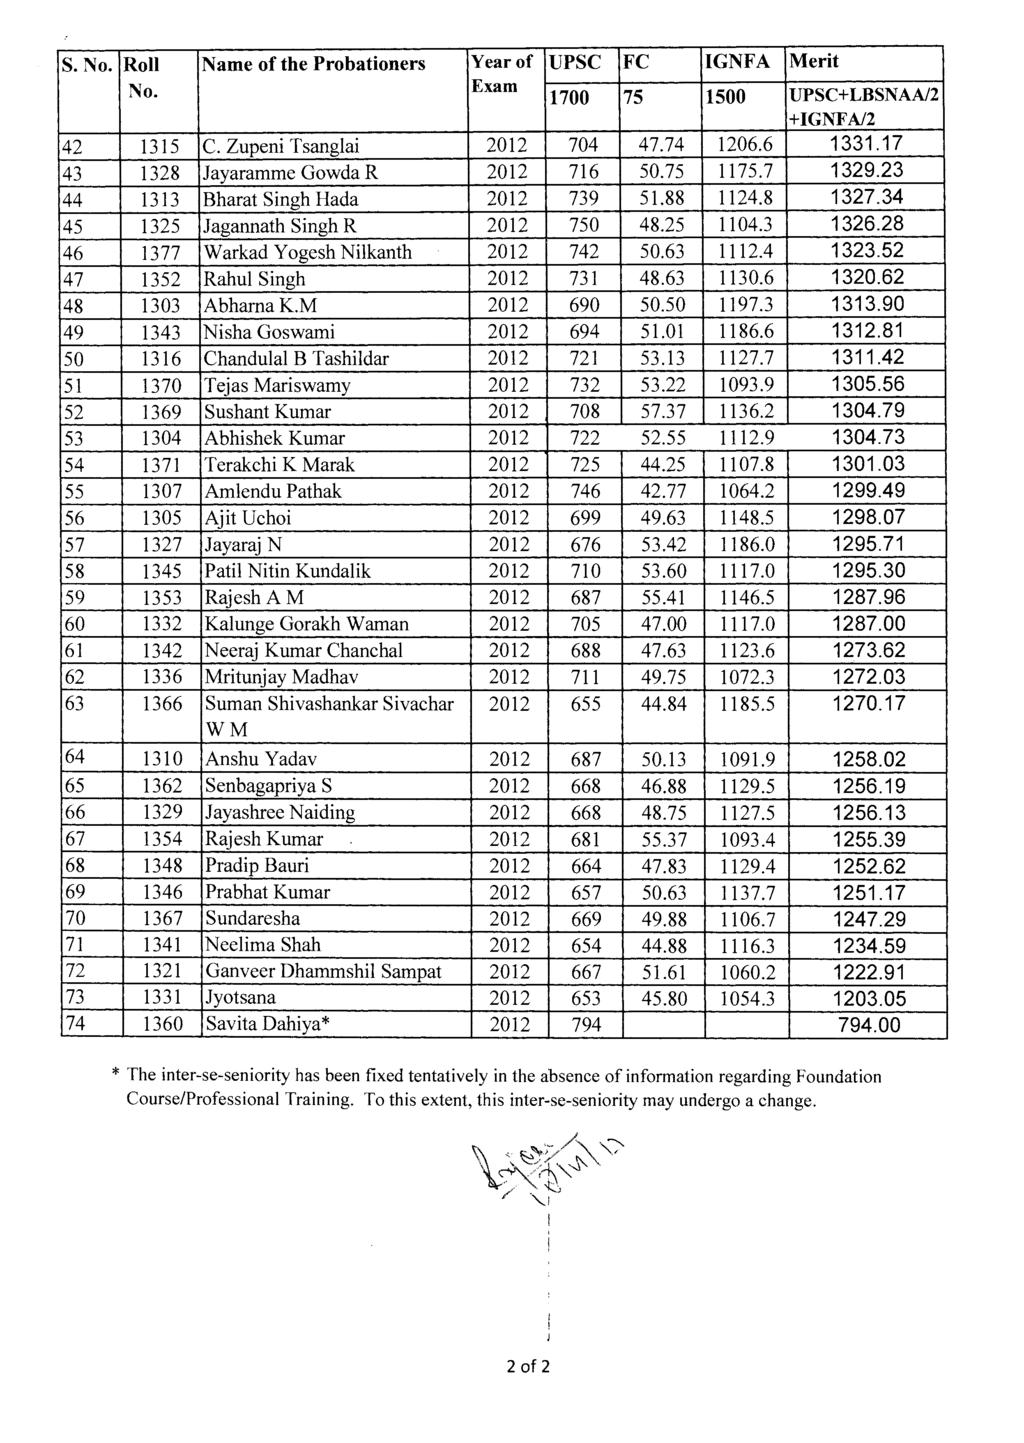 S. No. Roll Name of the Probationers Year of UPSC FC IGNFA Merit No. Exam 1700 75 1500 UPSC+LBSNAAJ2 +lgnfal2 42 1315 C. Zupeni Tsanglai 2012 704 47.74 1206.6 1331.